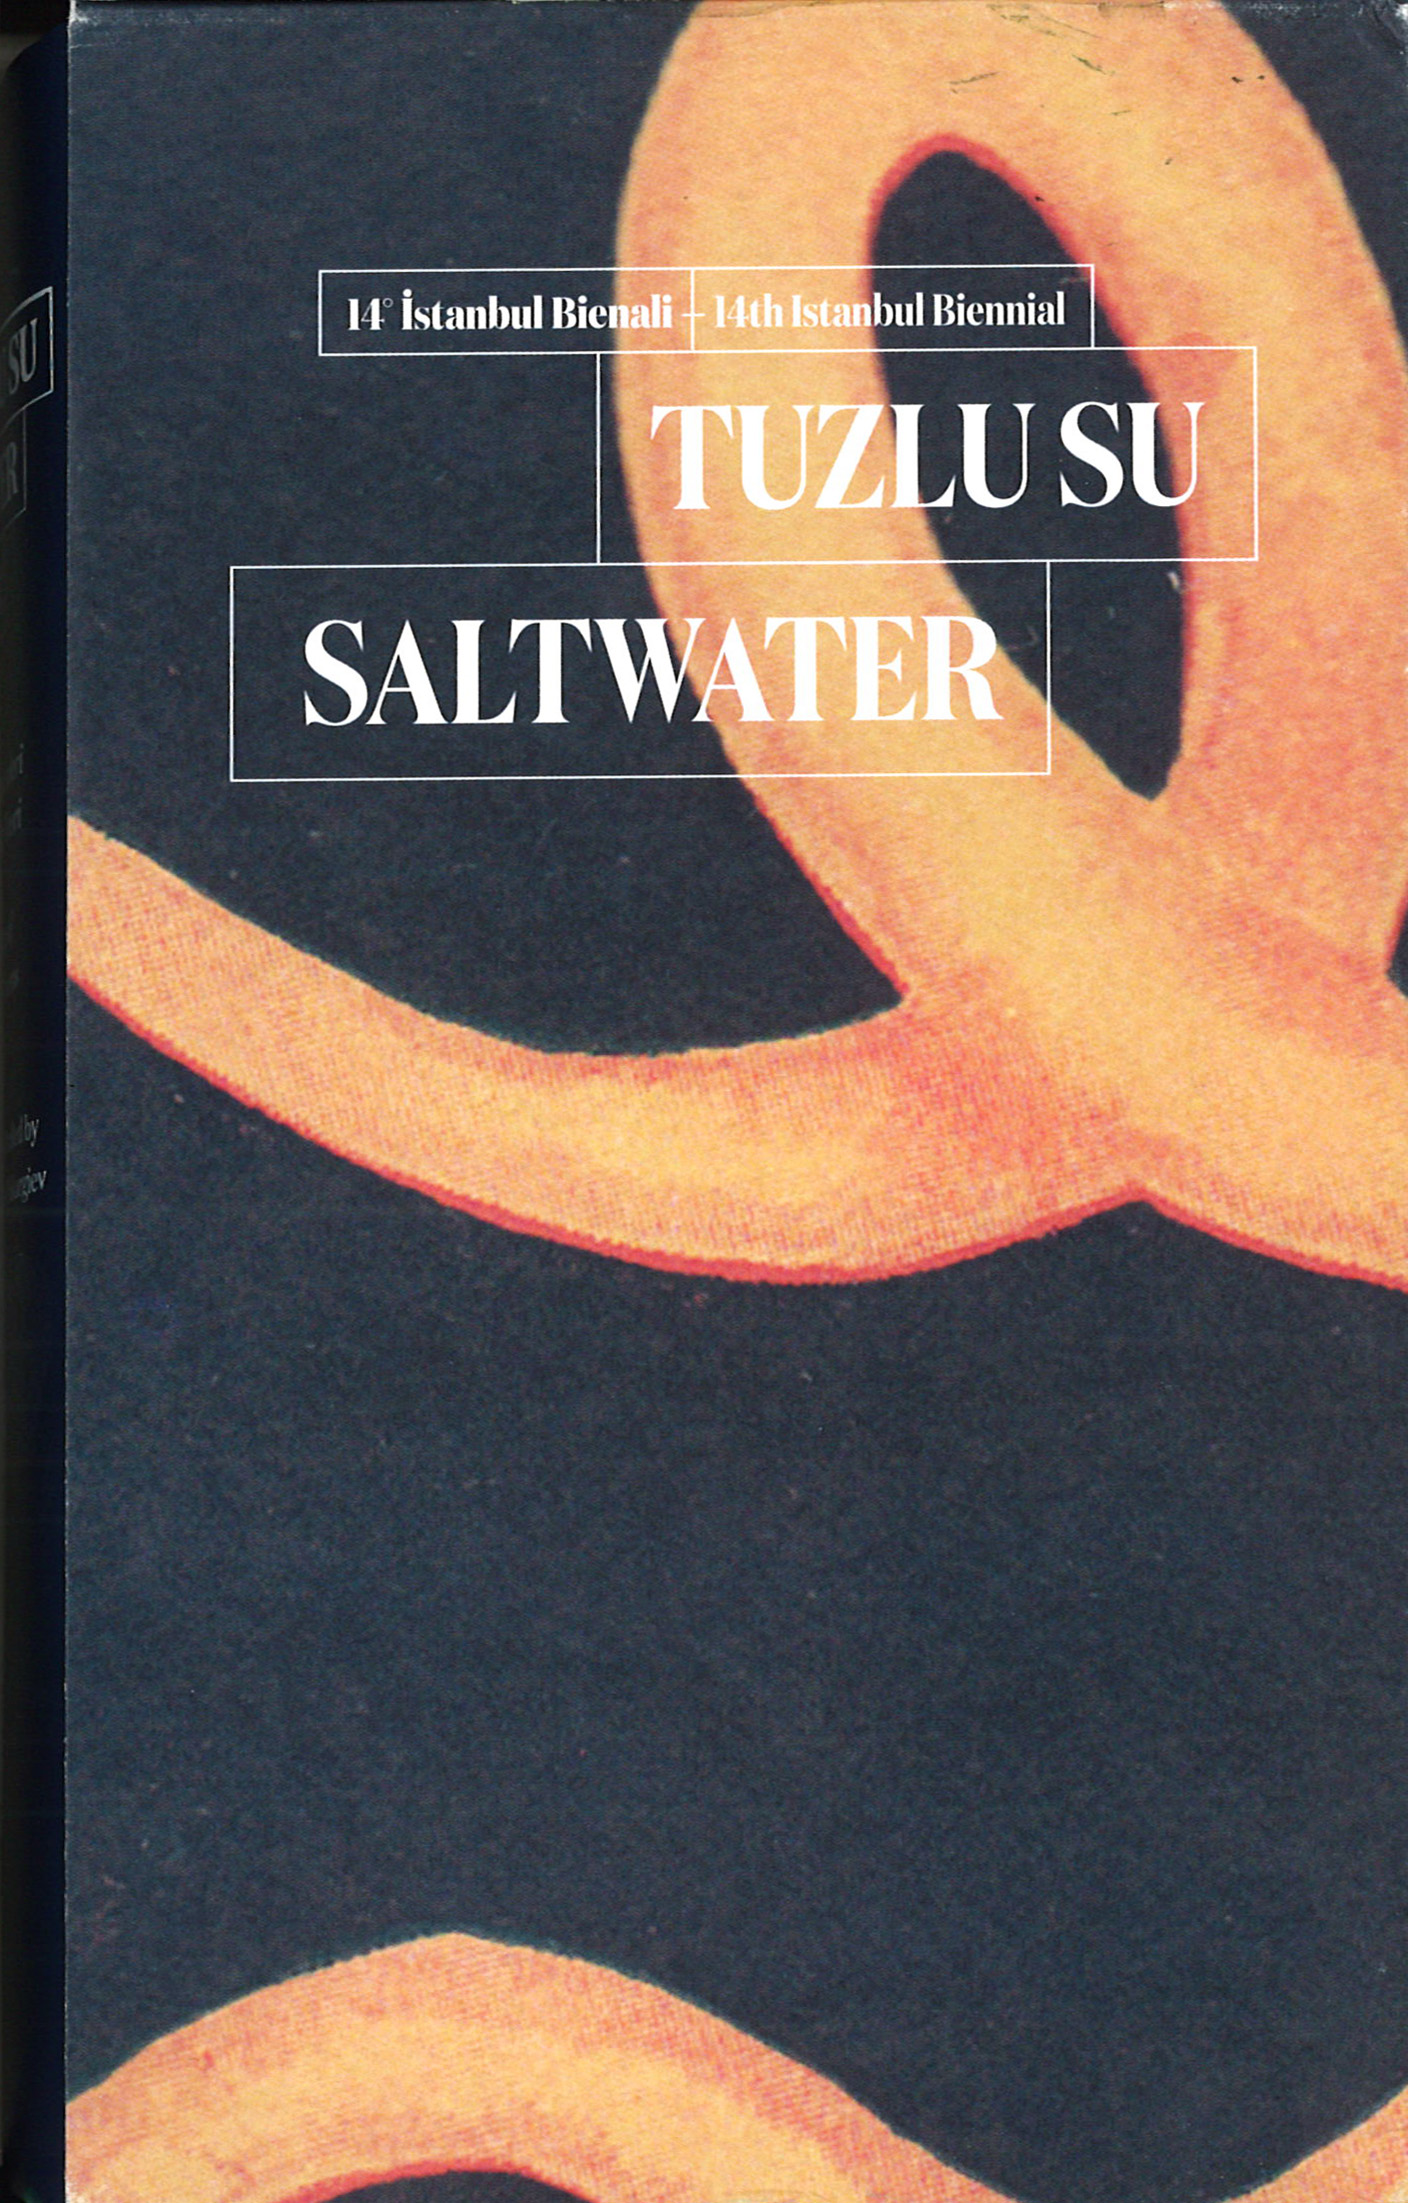 Tuzlu Su - Saltwater